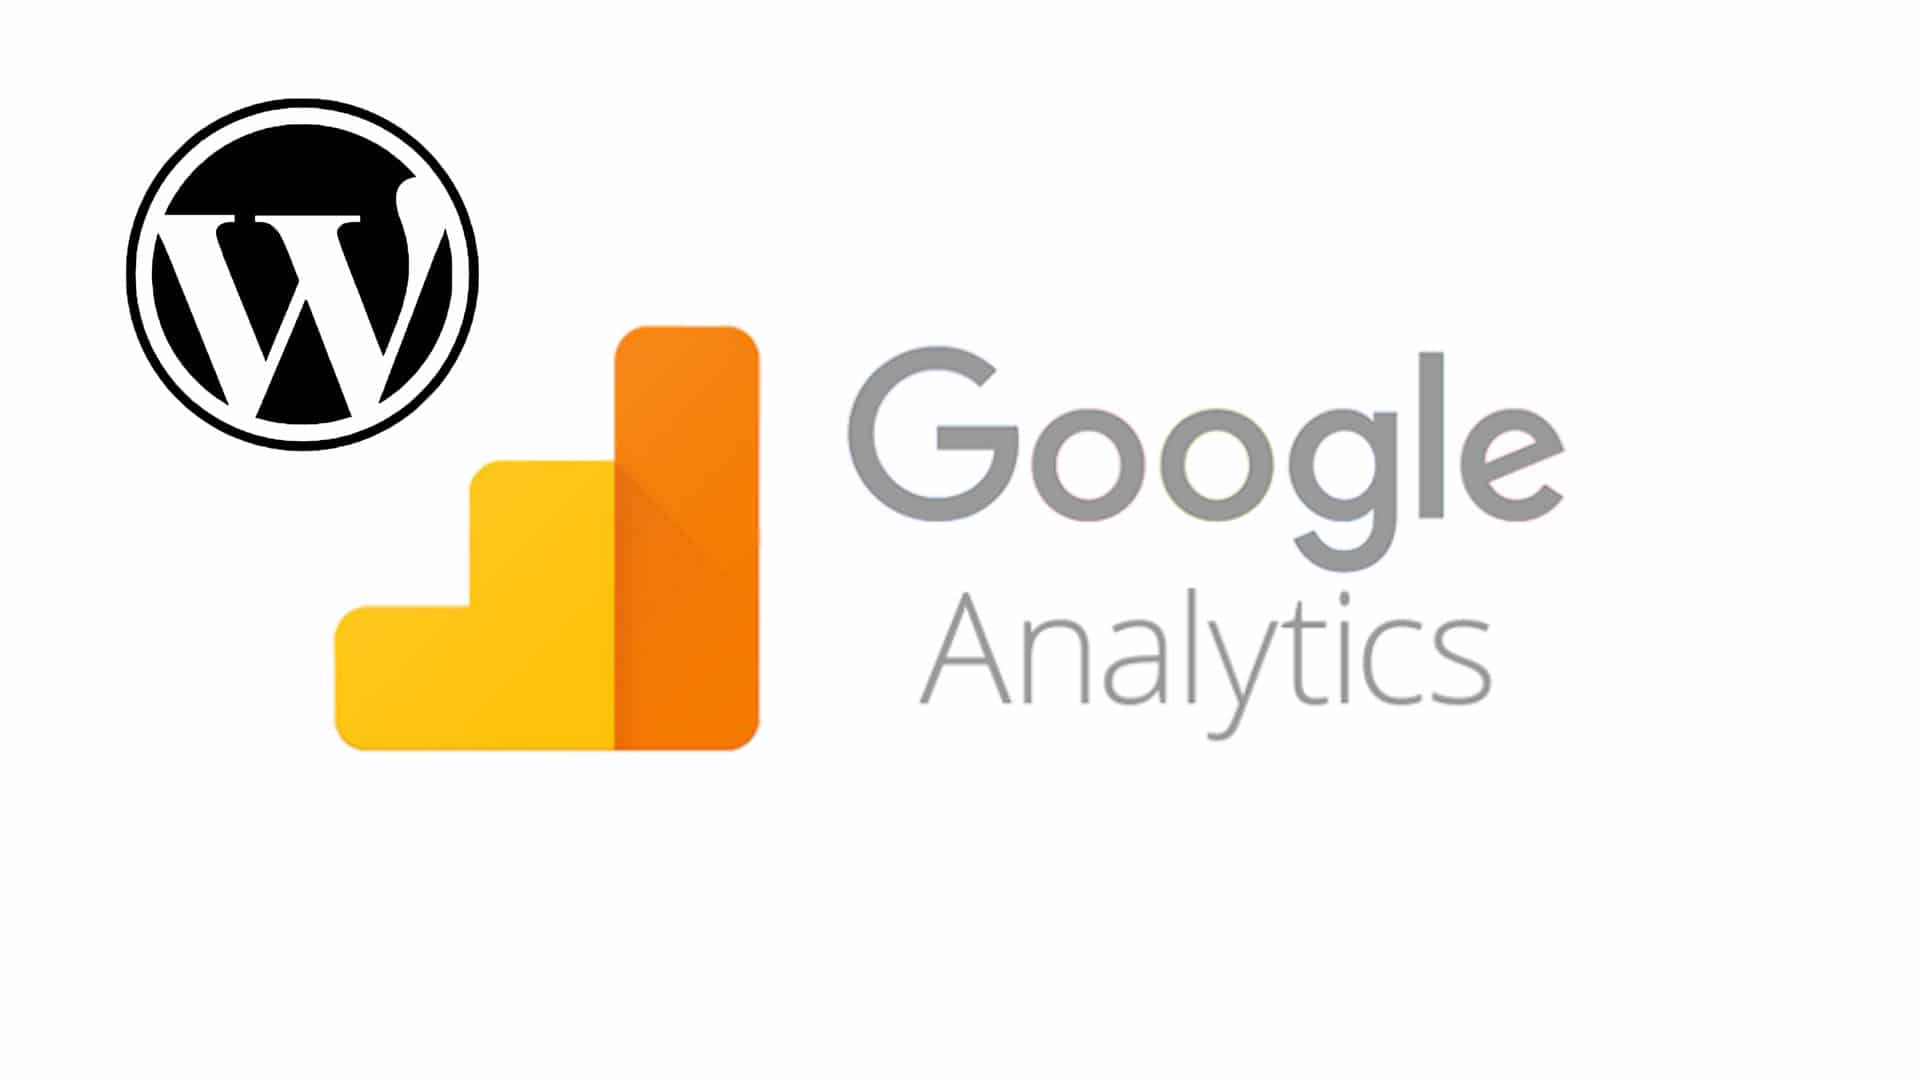 Google analytics with WordPress logo. Concept on how to use google analytics with WordPress. Google analytics data can help your website achieve success.